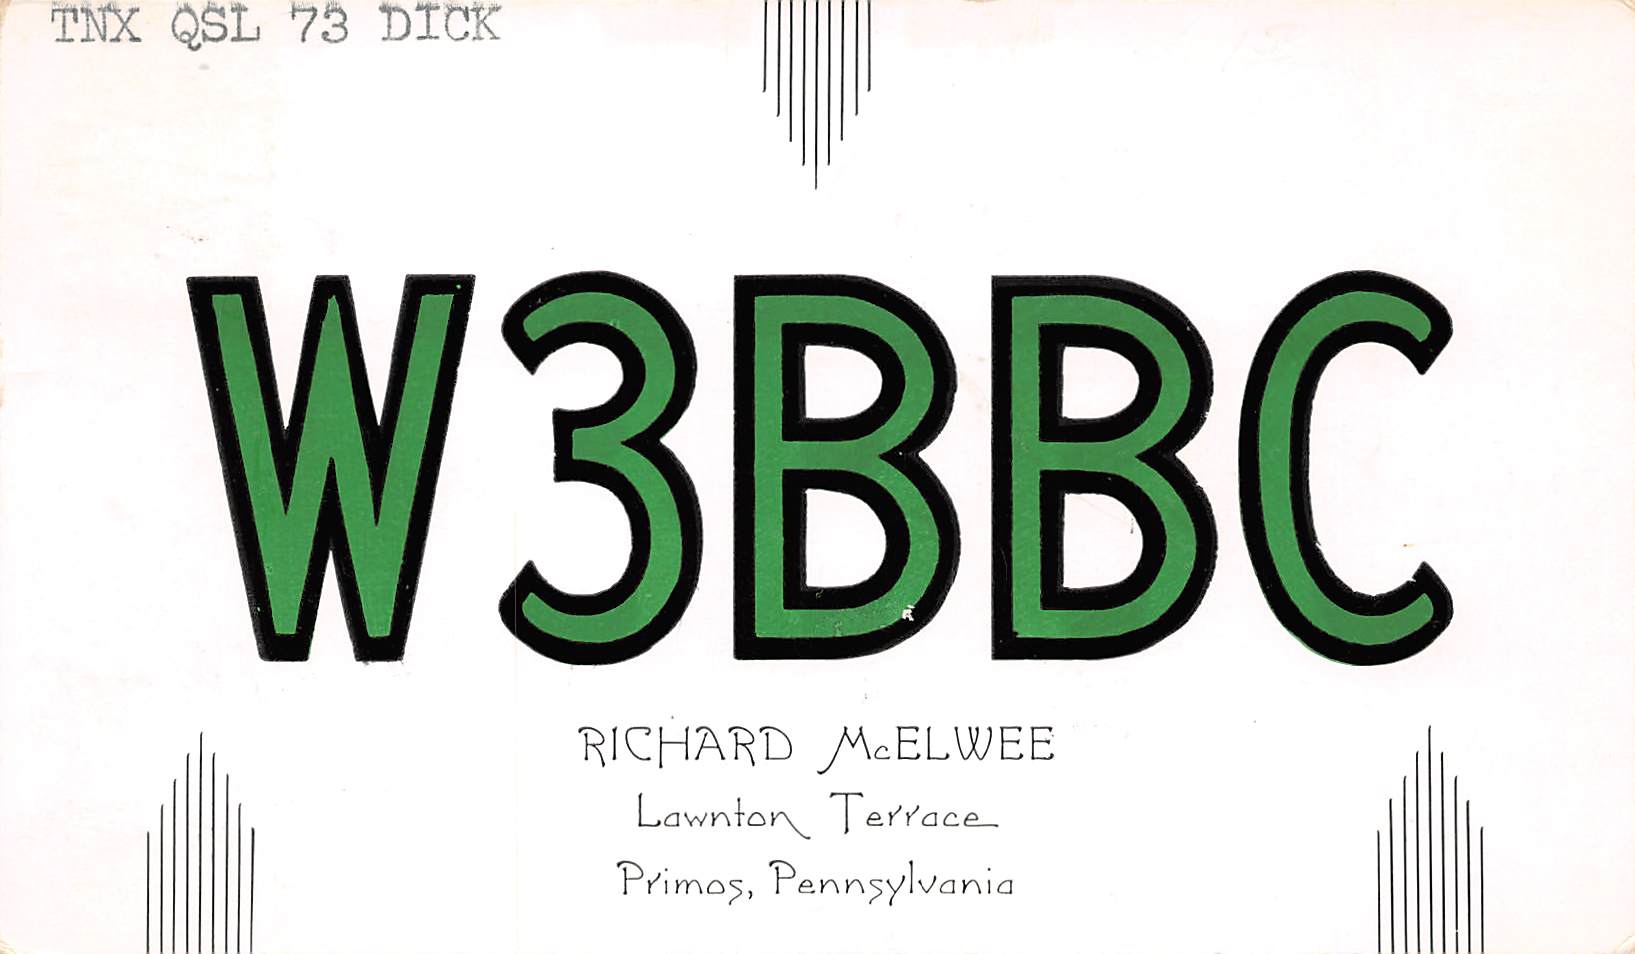 Primos Pennsylvania W3BBC, Richard McElwee, QSL Two Way Radio Card PC U9447